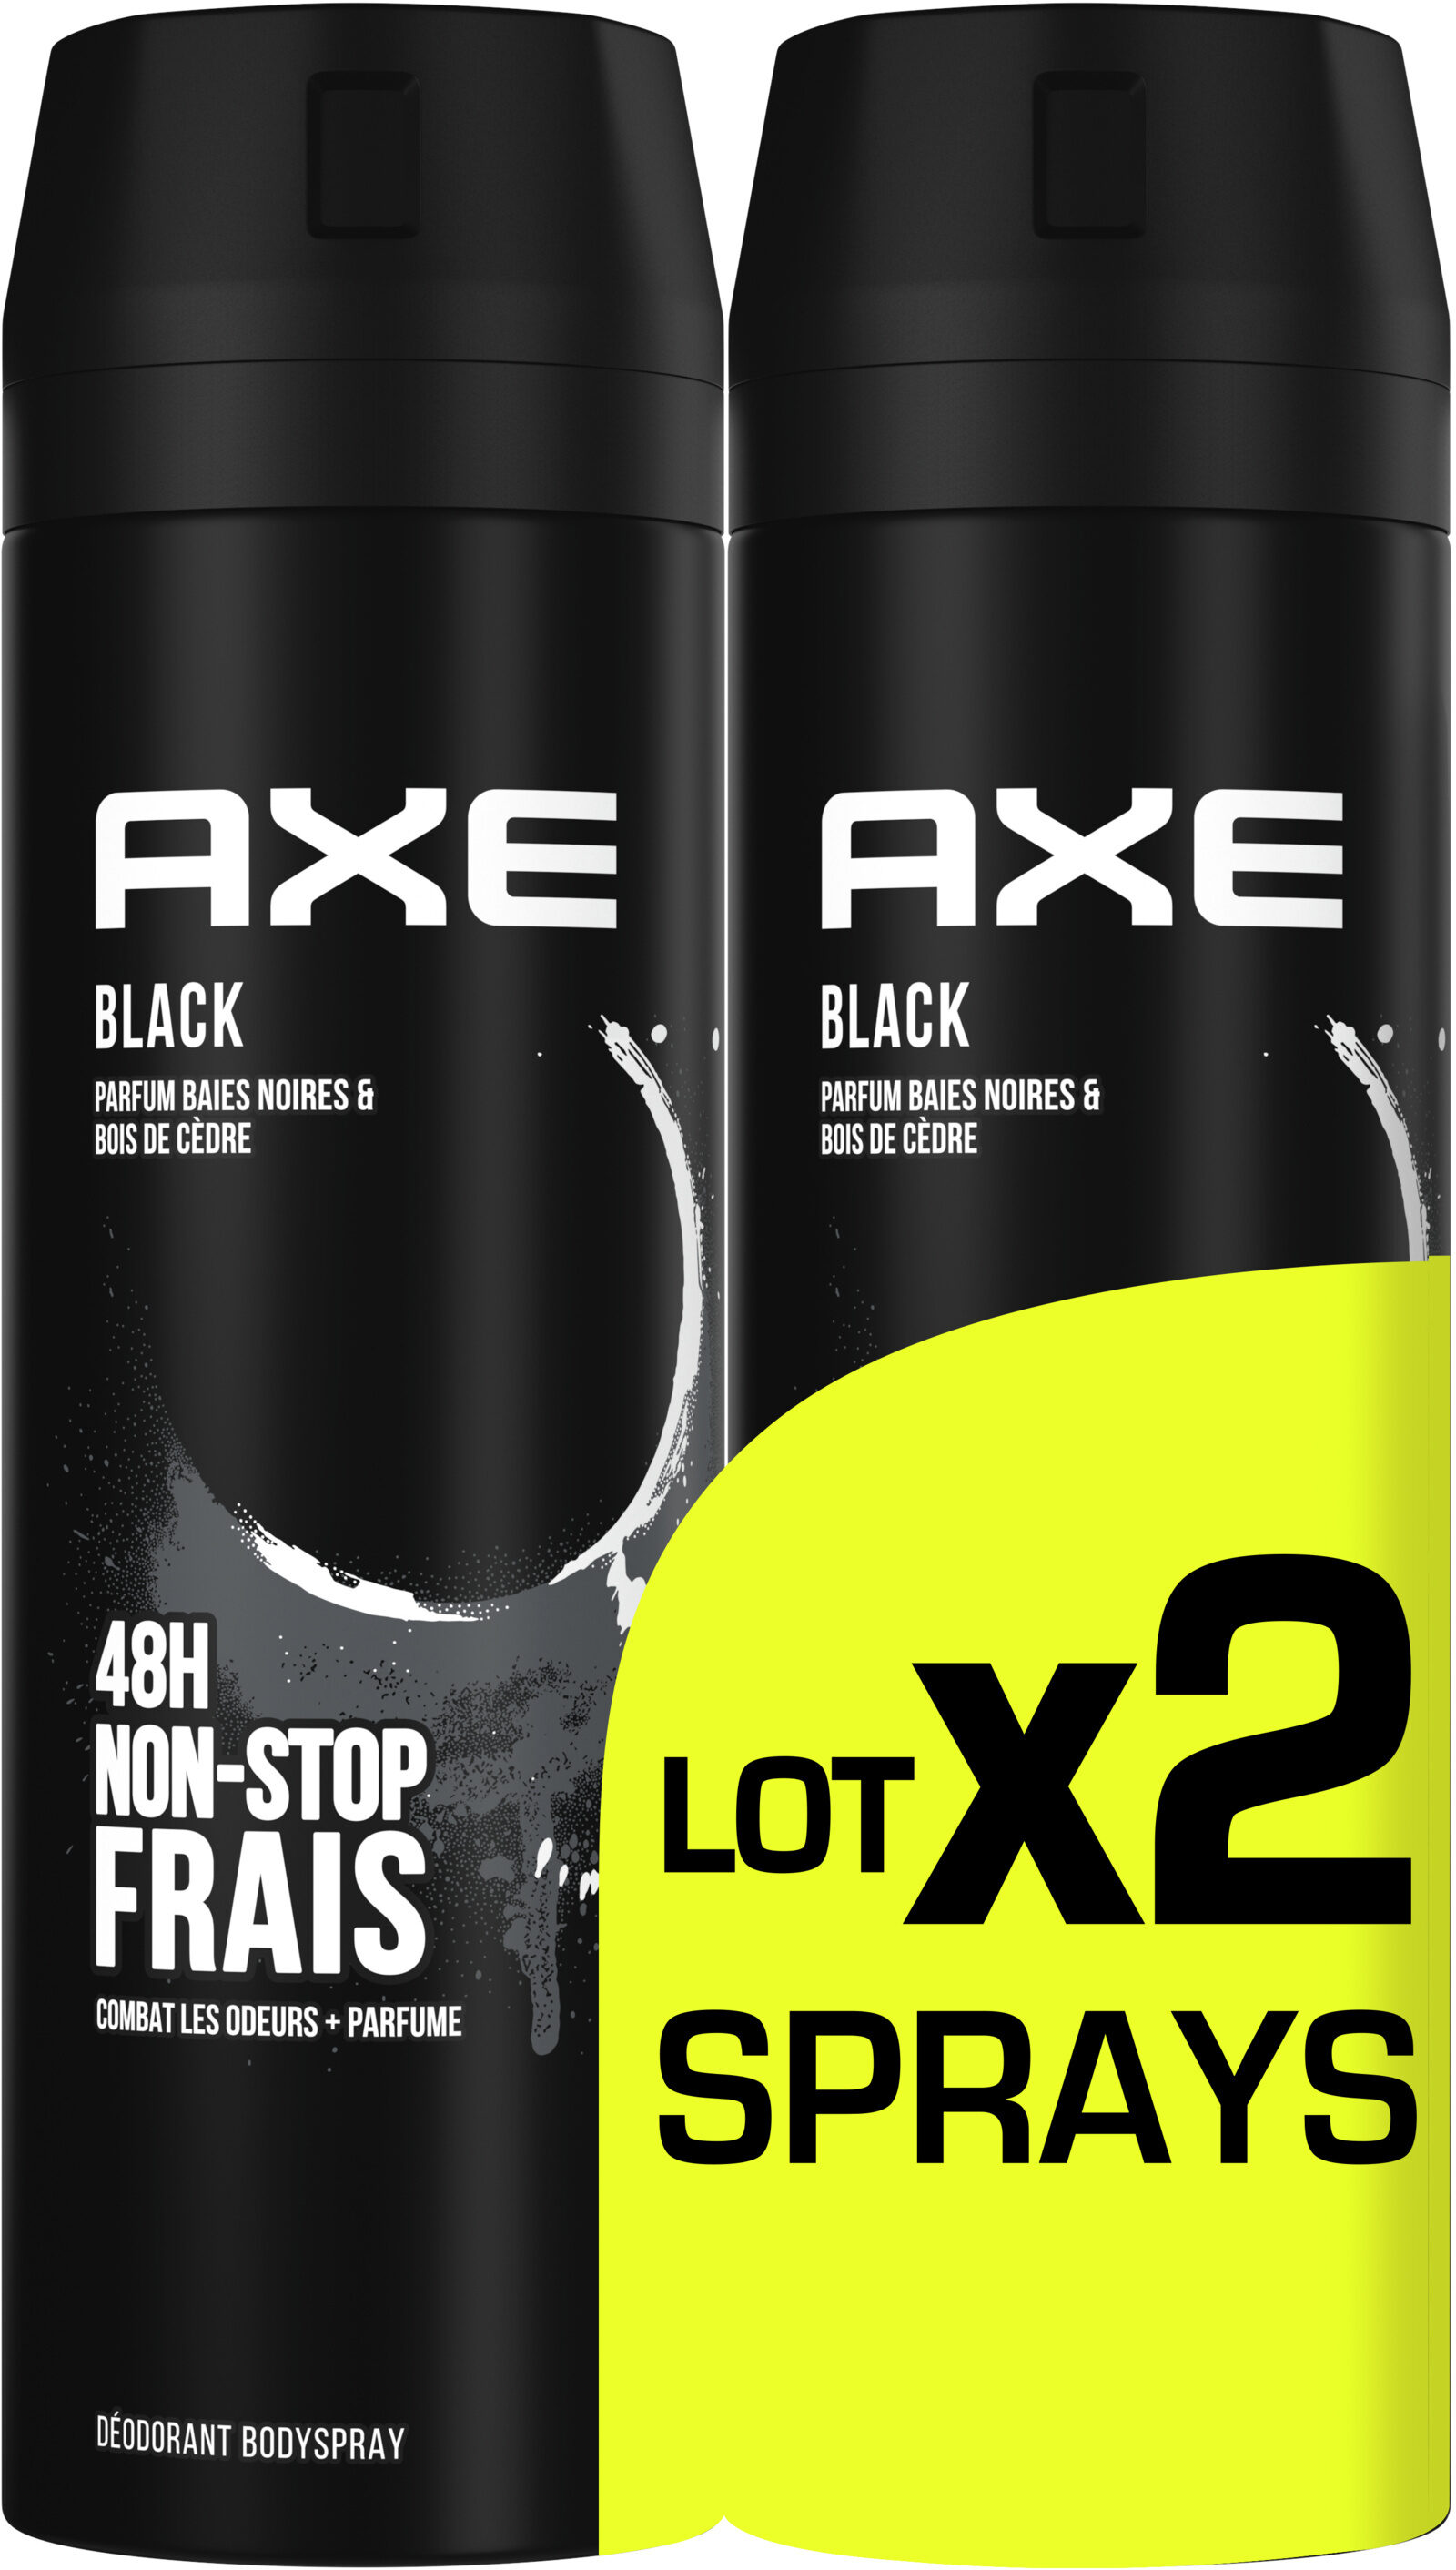 AXE Déodorant Bodyspray Homme Black 48h Non-Stop Frais Lot2x200ml - Product - fr